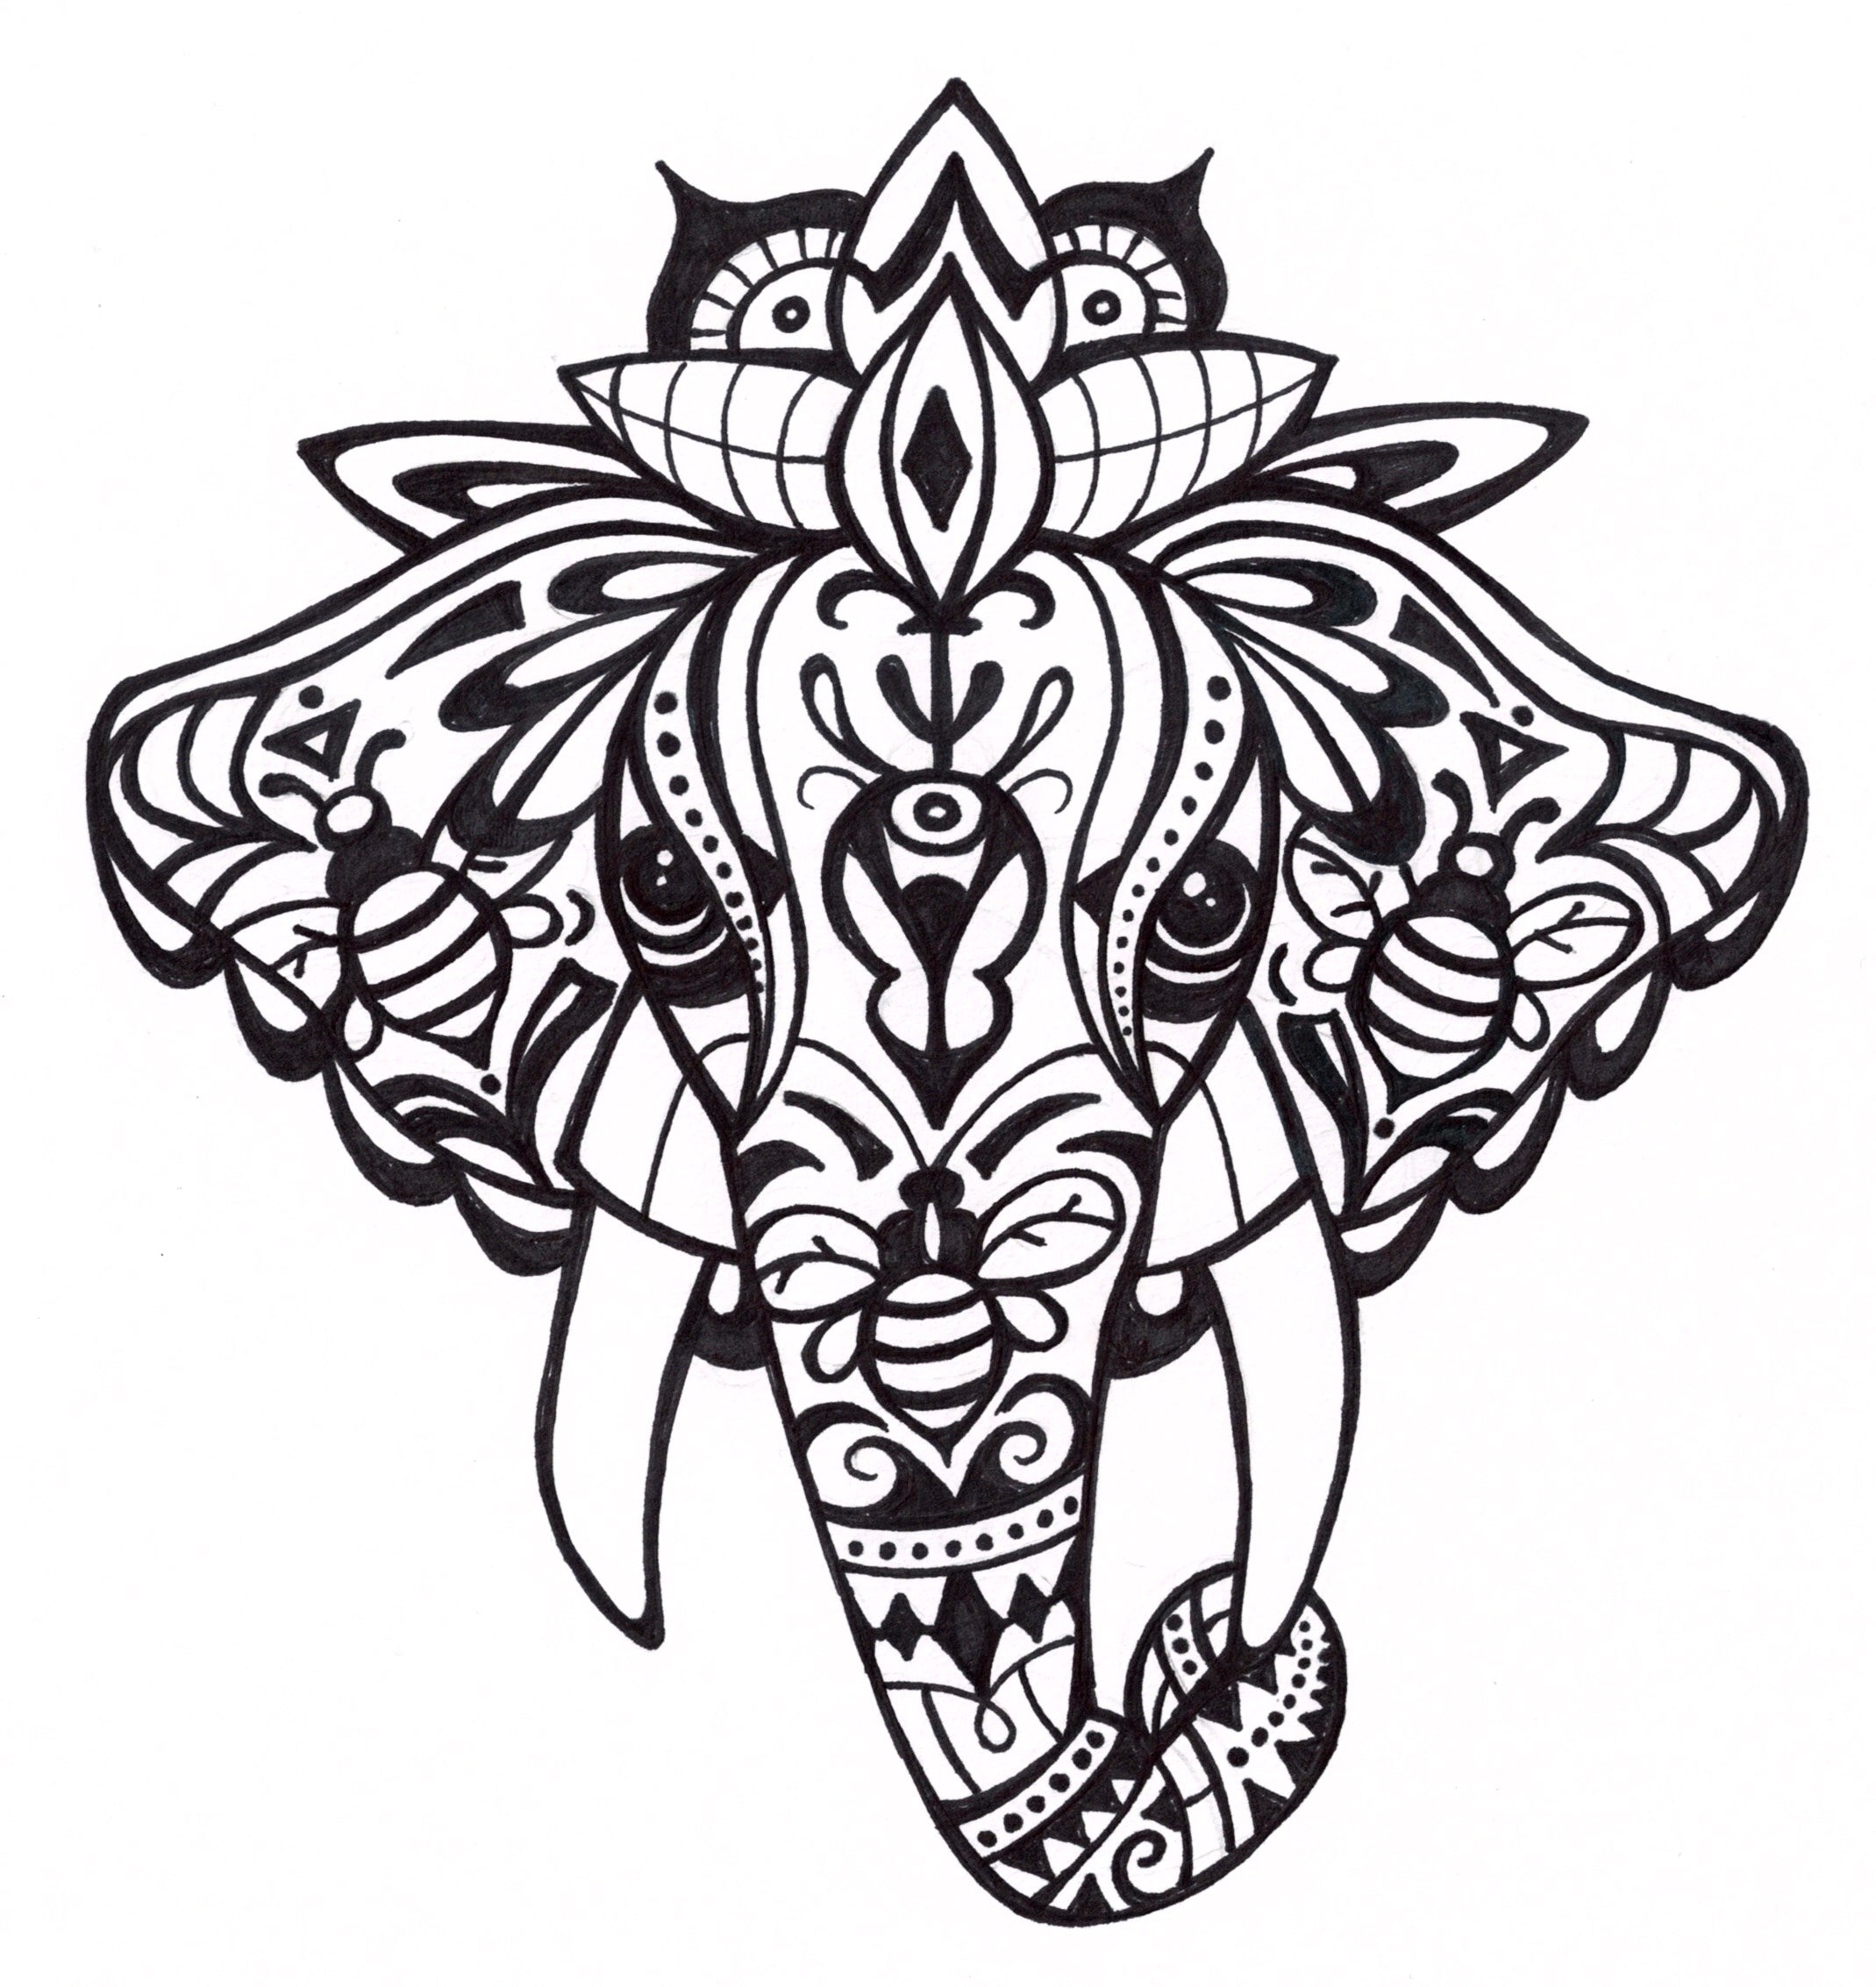 A beautiful elephant design by Artist contest winner Lilu Designs.